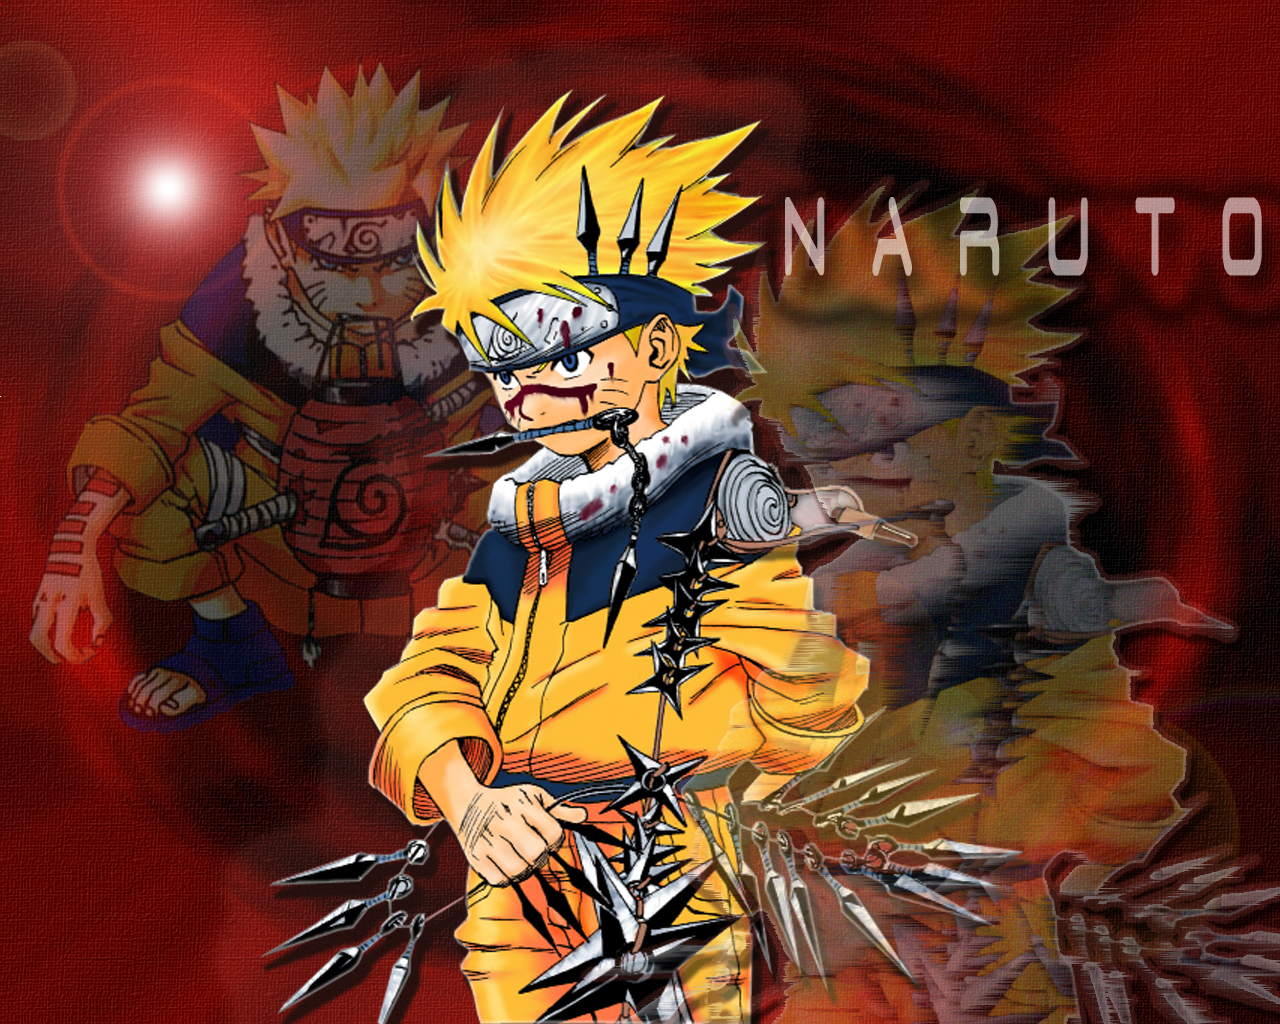 Cool Naruto Wallpapers Hd - WallpaperSafari